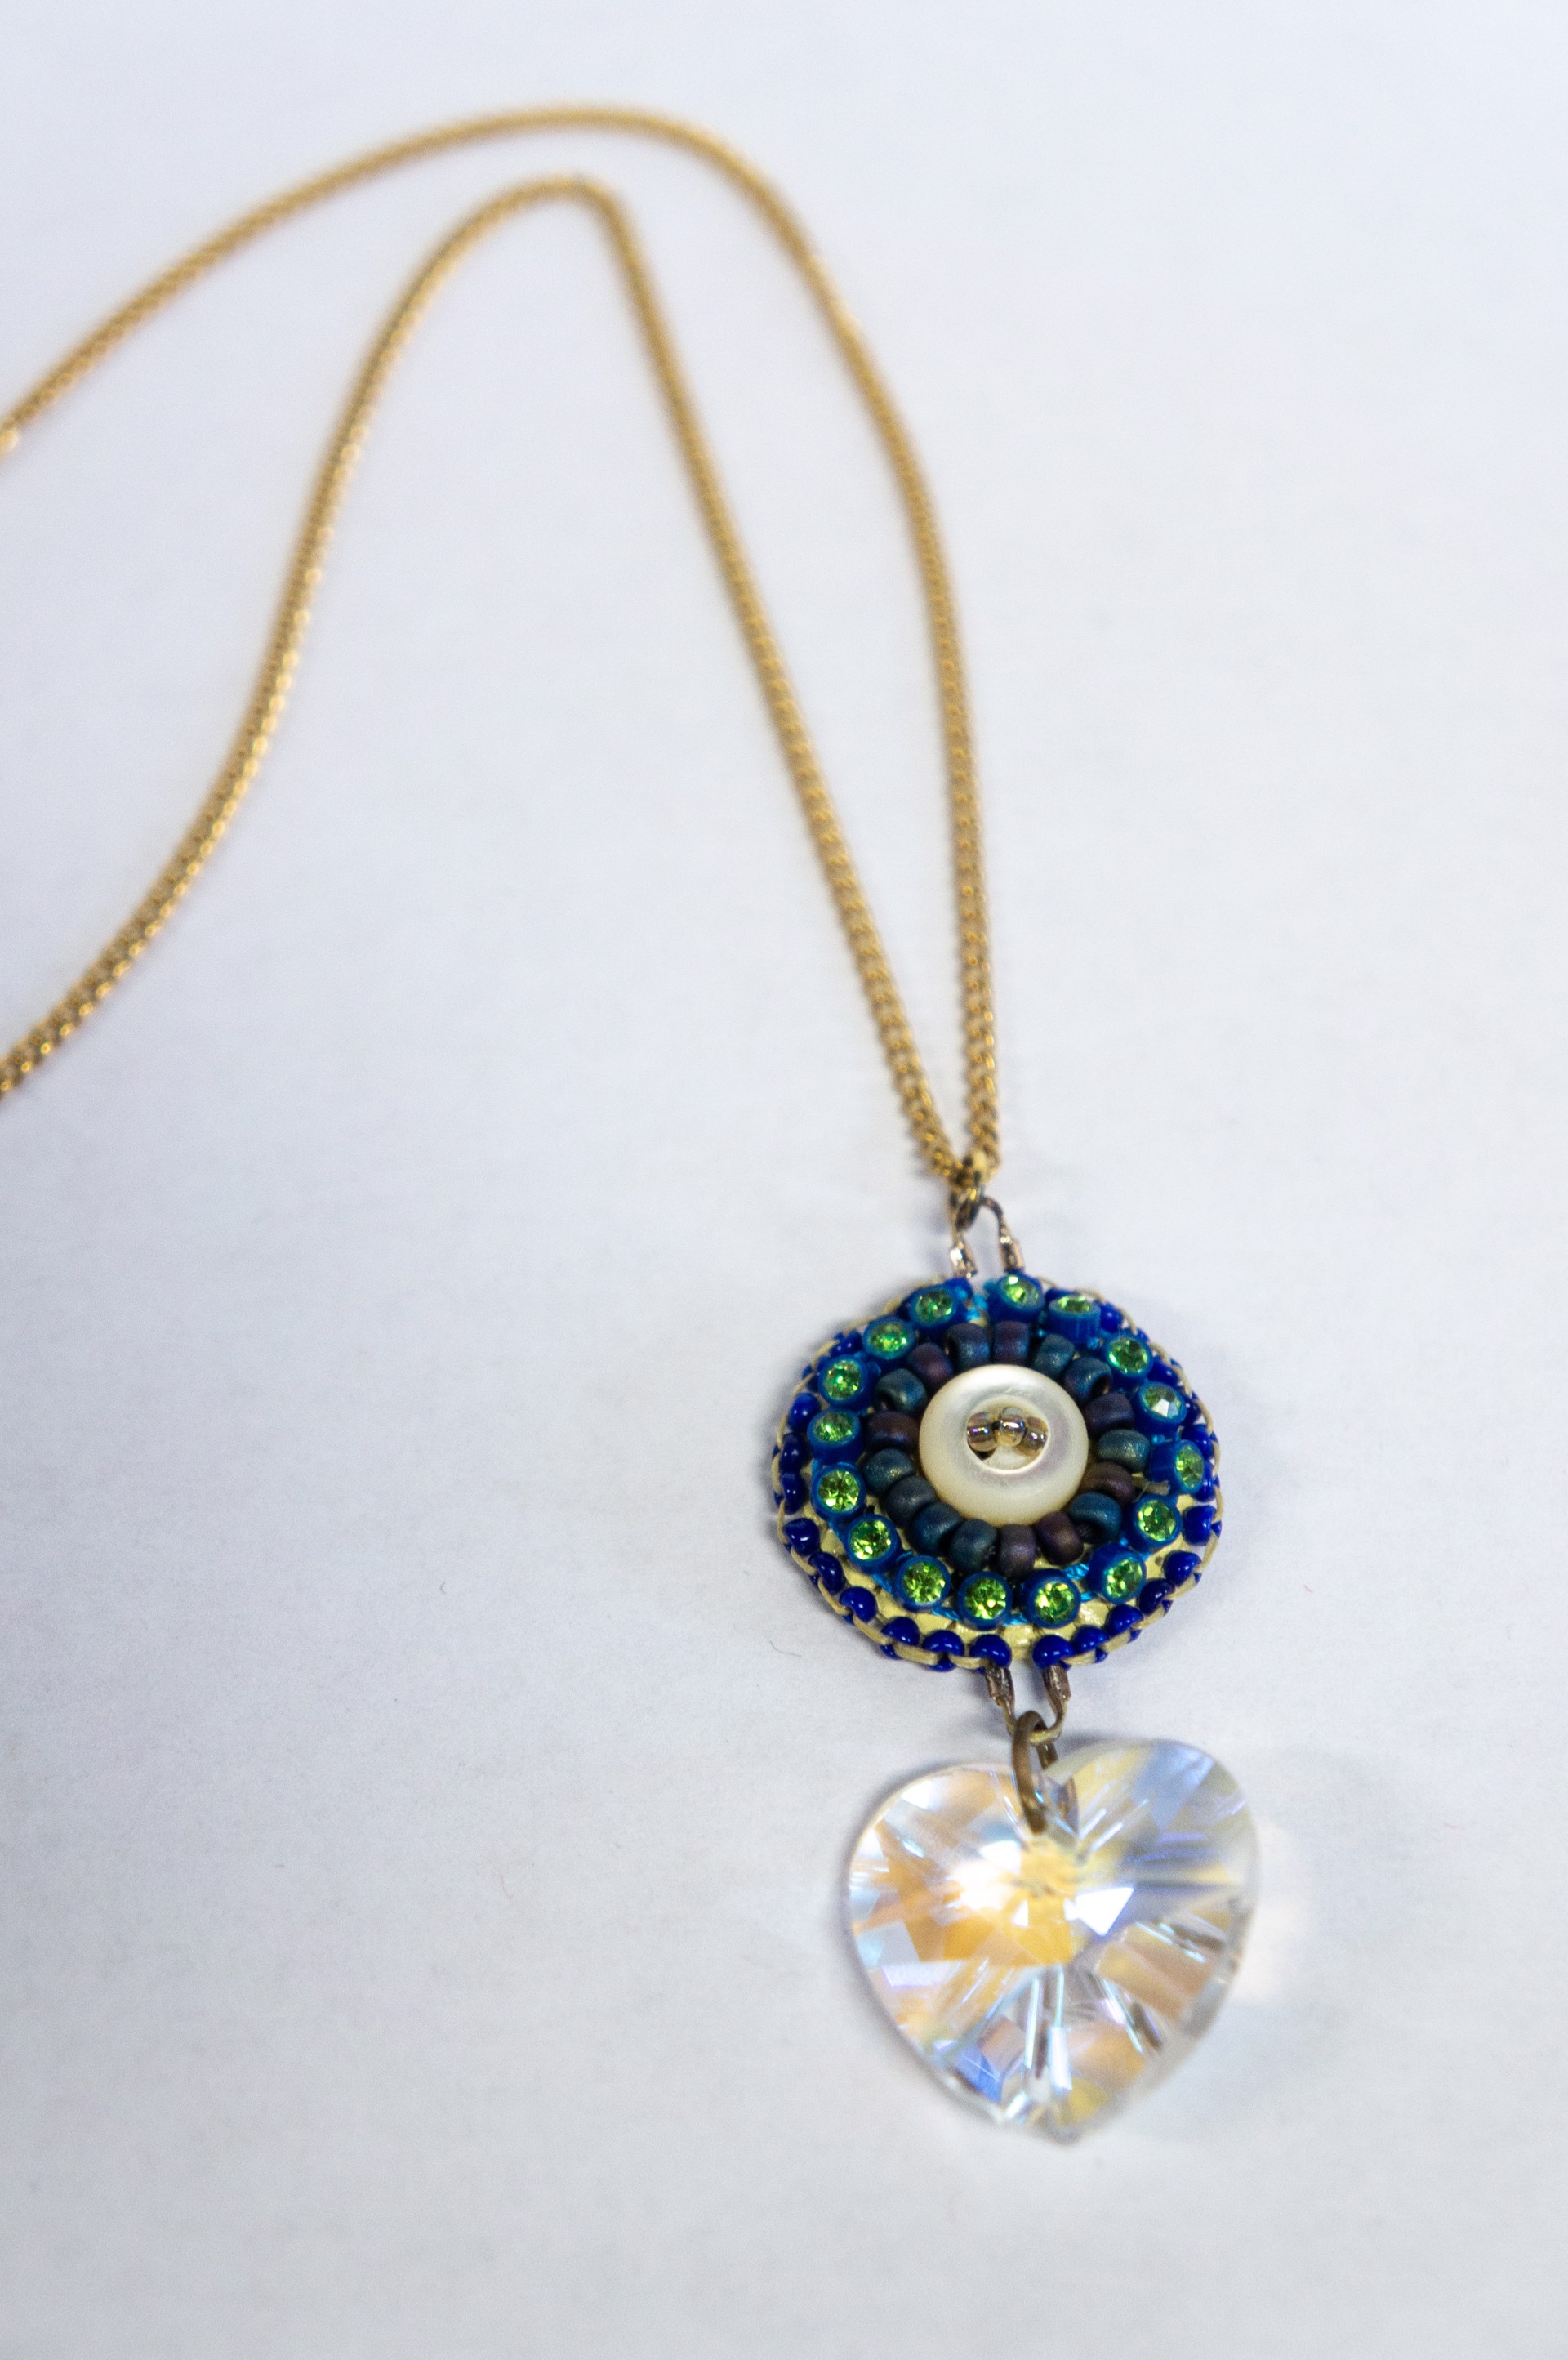 Prism Necklace by Hattie Lee